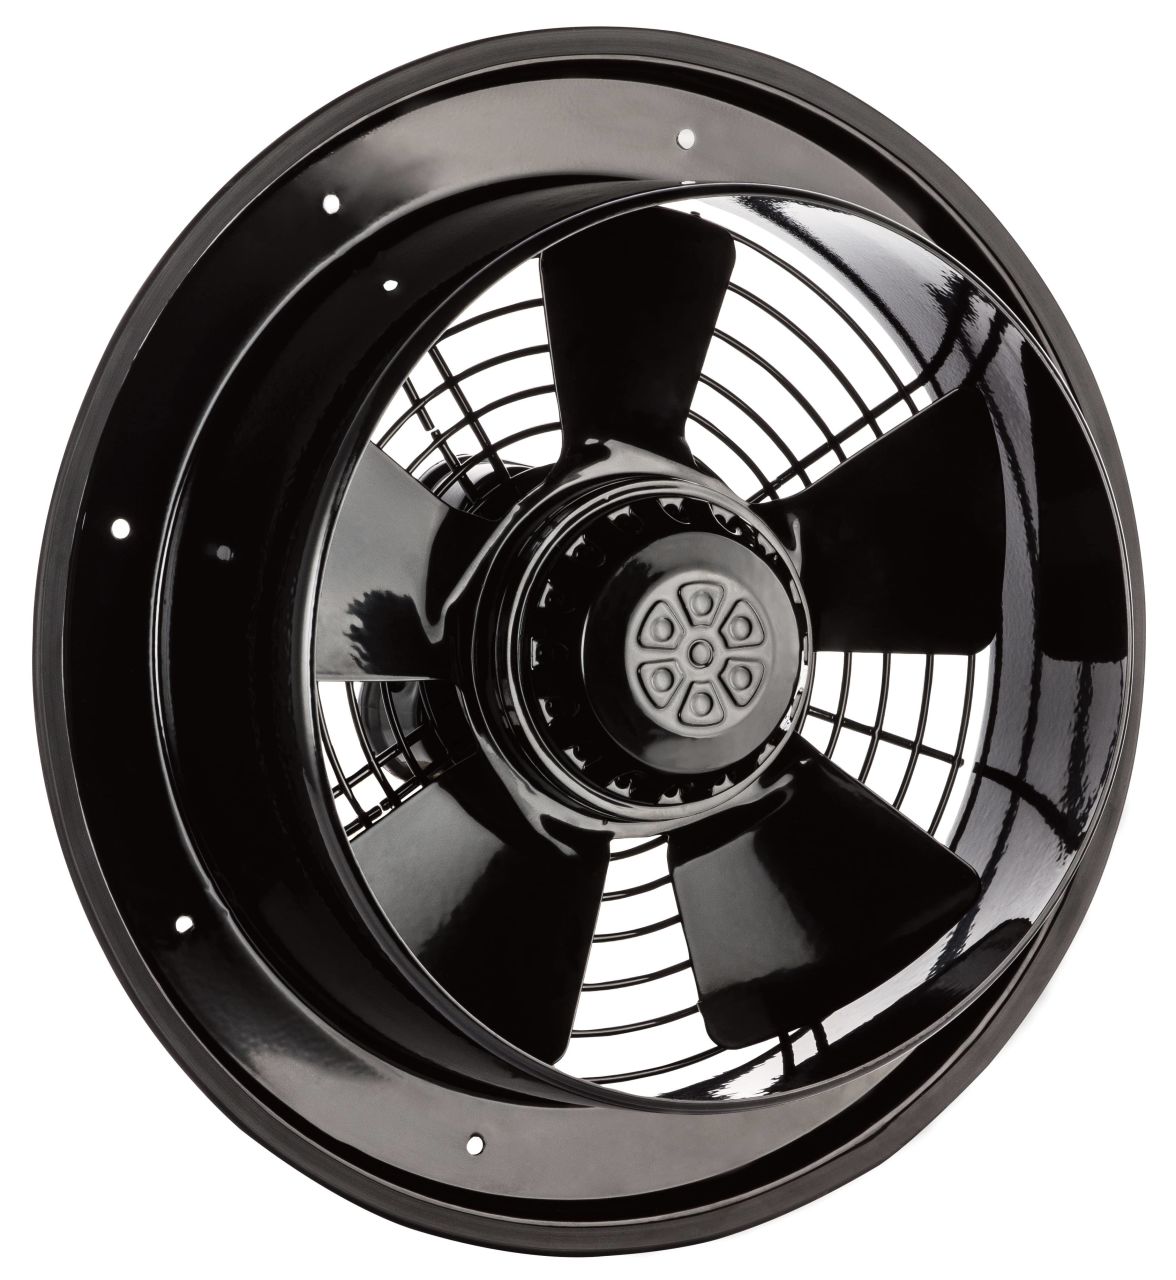 Bvn Bahçıvan Bdrax 250-4K Aksiyel Fan (760m³/h)